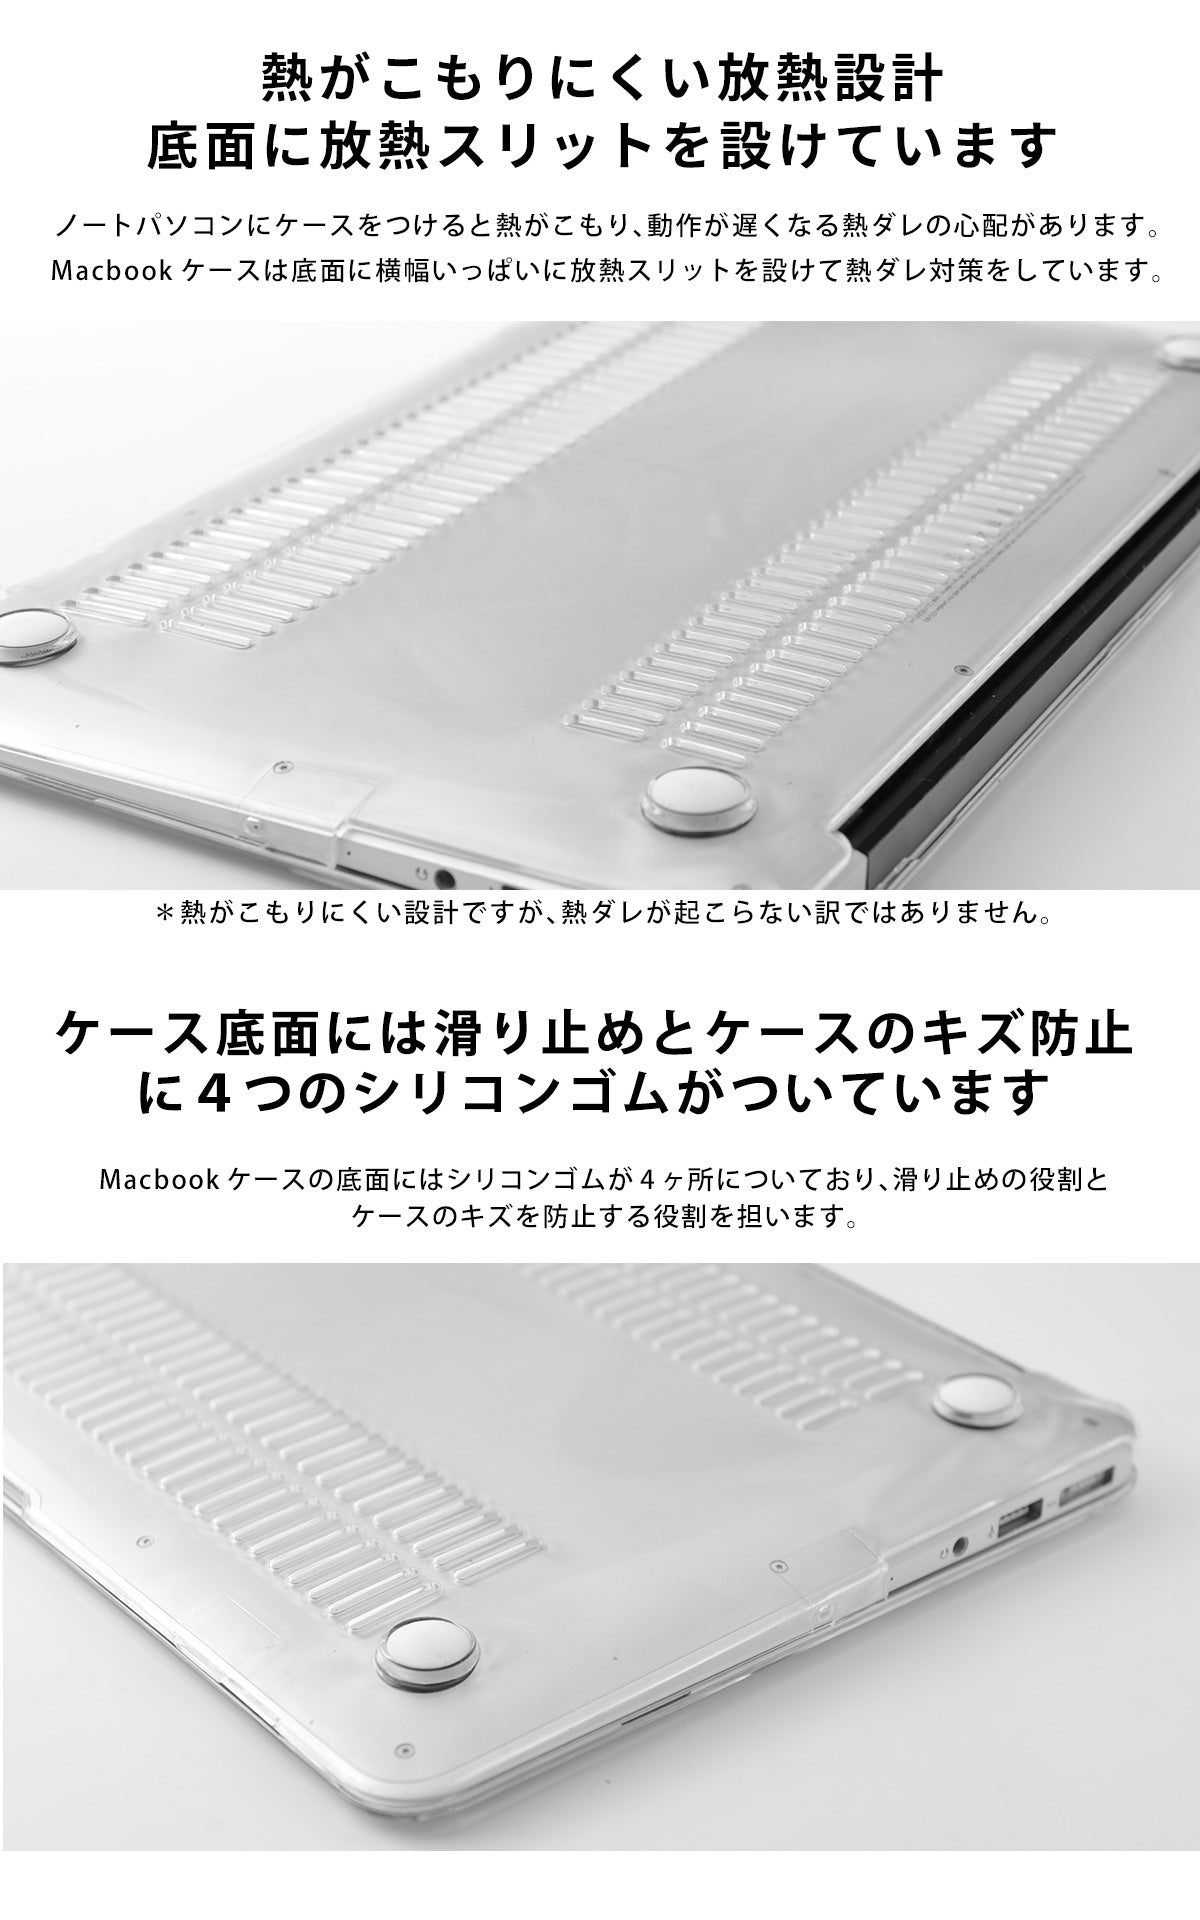 Macbookケース底面に放熱スリットとシリコンゴムで放熱設計